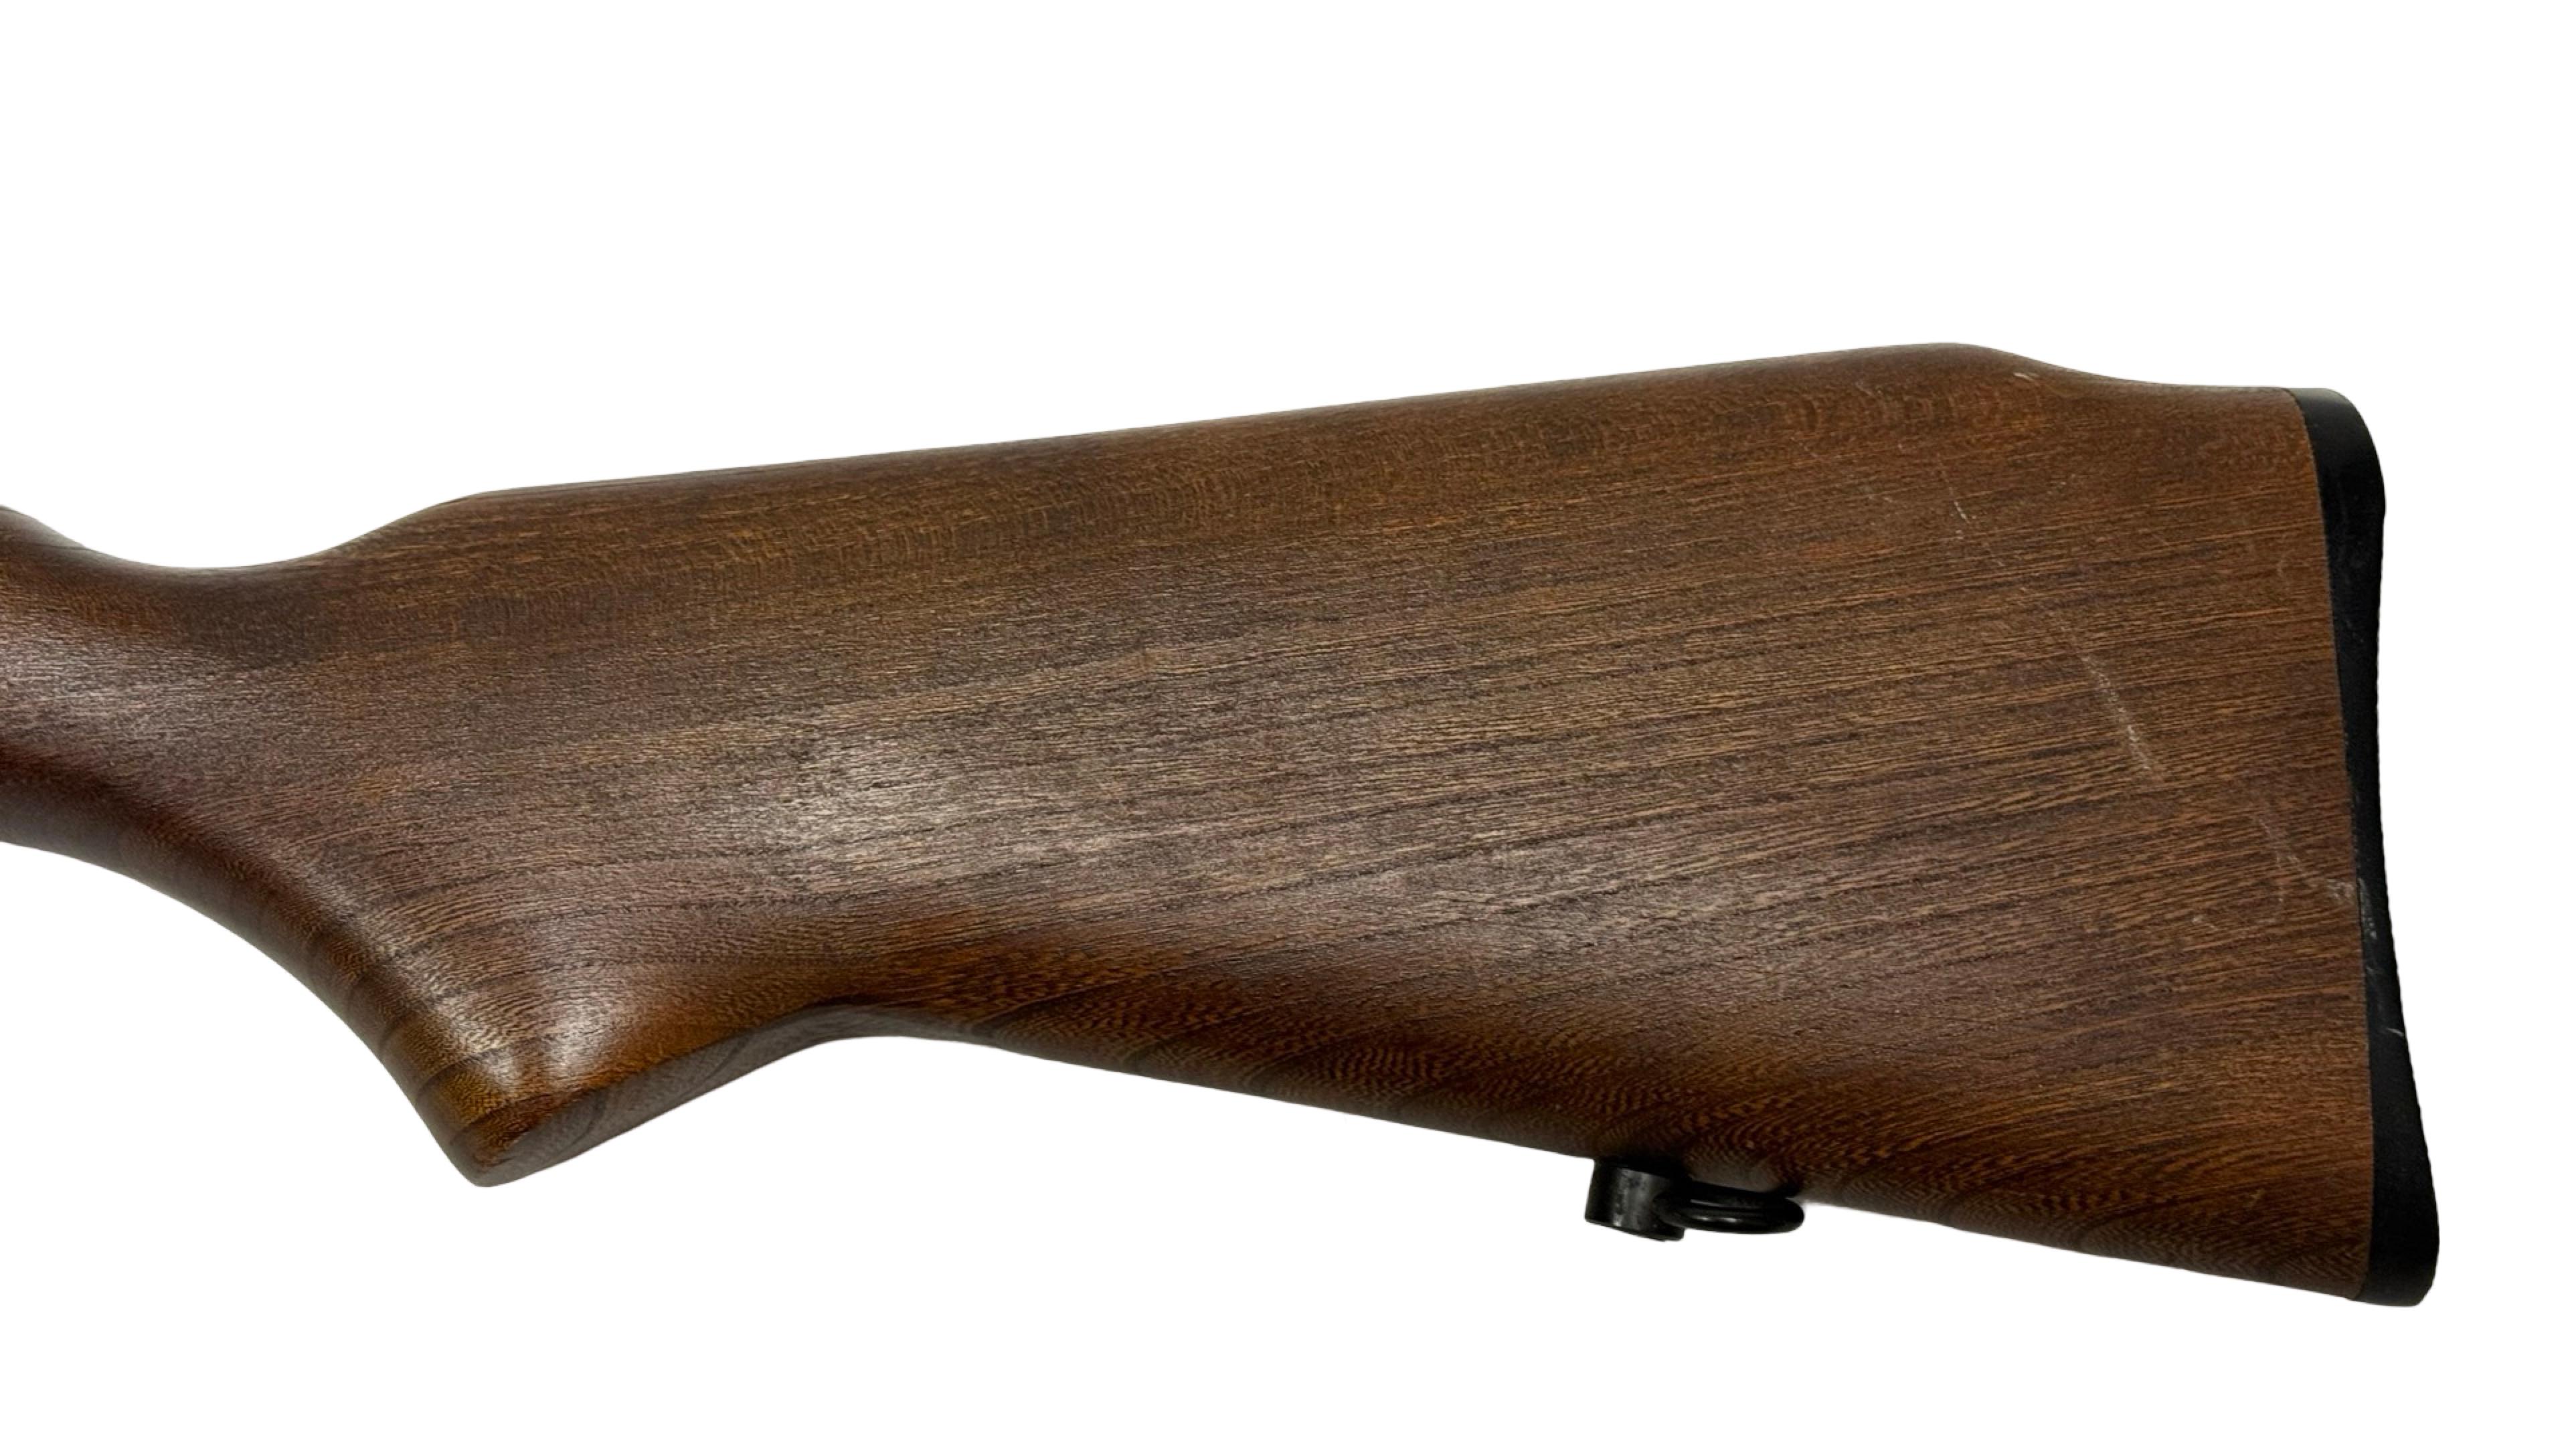 Excellent 1968 Marlin Glenfield Model 25 .22 S-L-LR Bolt Action Magazine Rifle